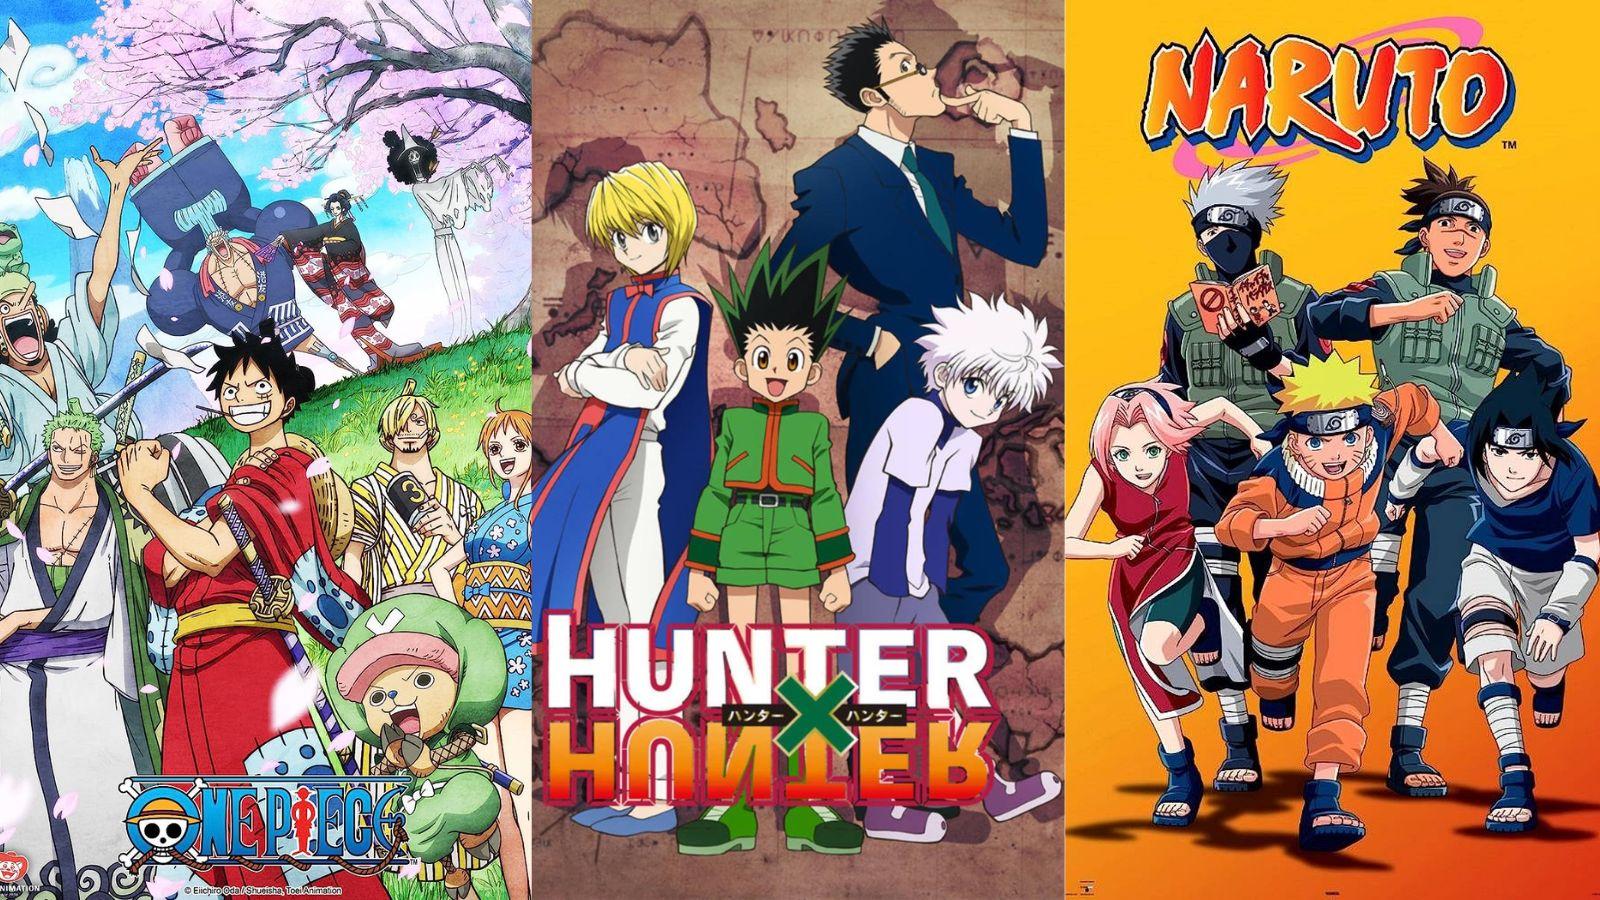 Long-running anime series